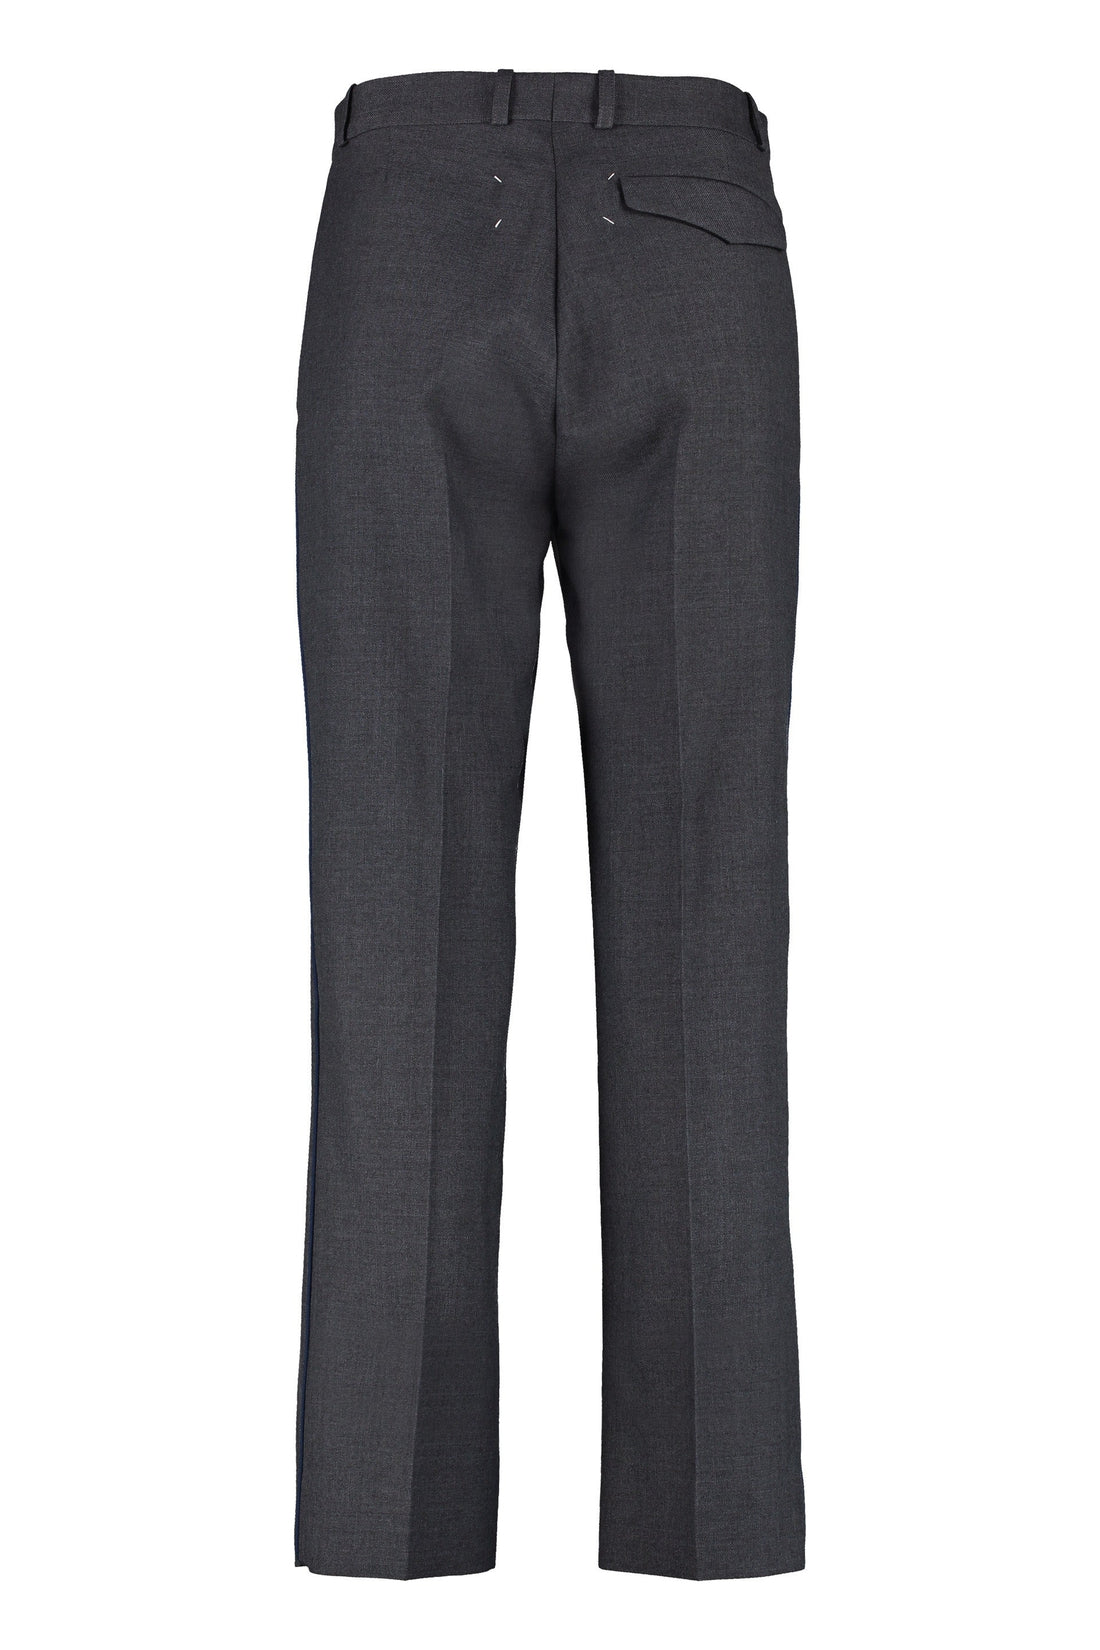 Maison Margiela-OUTLET-SALE-Wool blend tailored trousers-ARCHIVIST